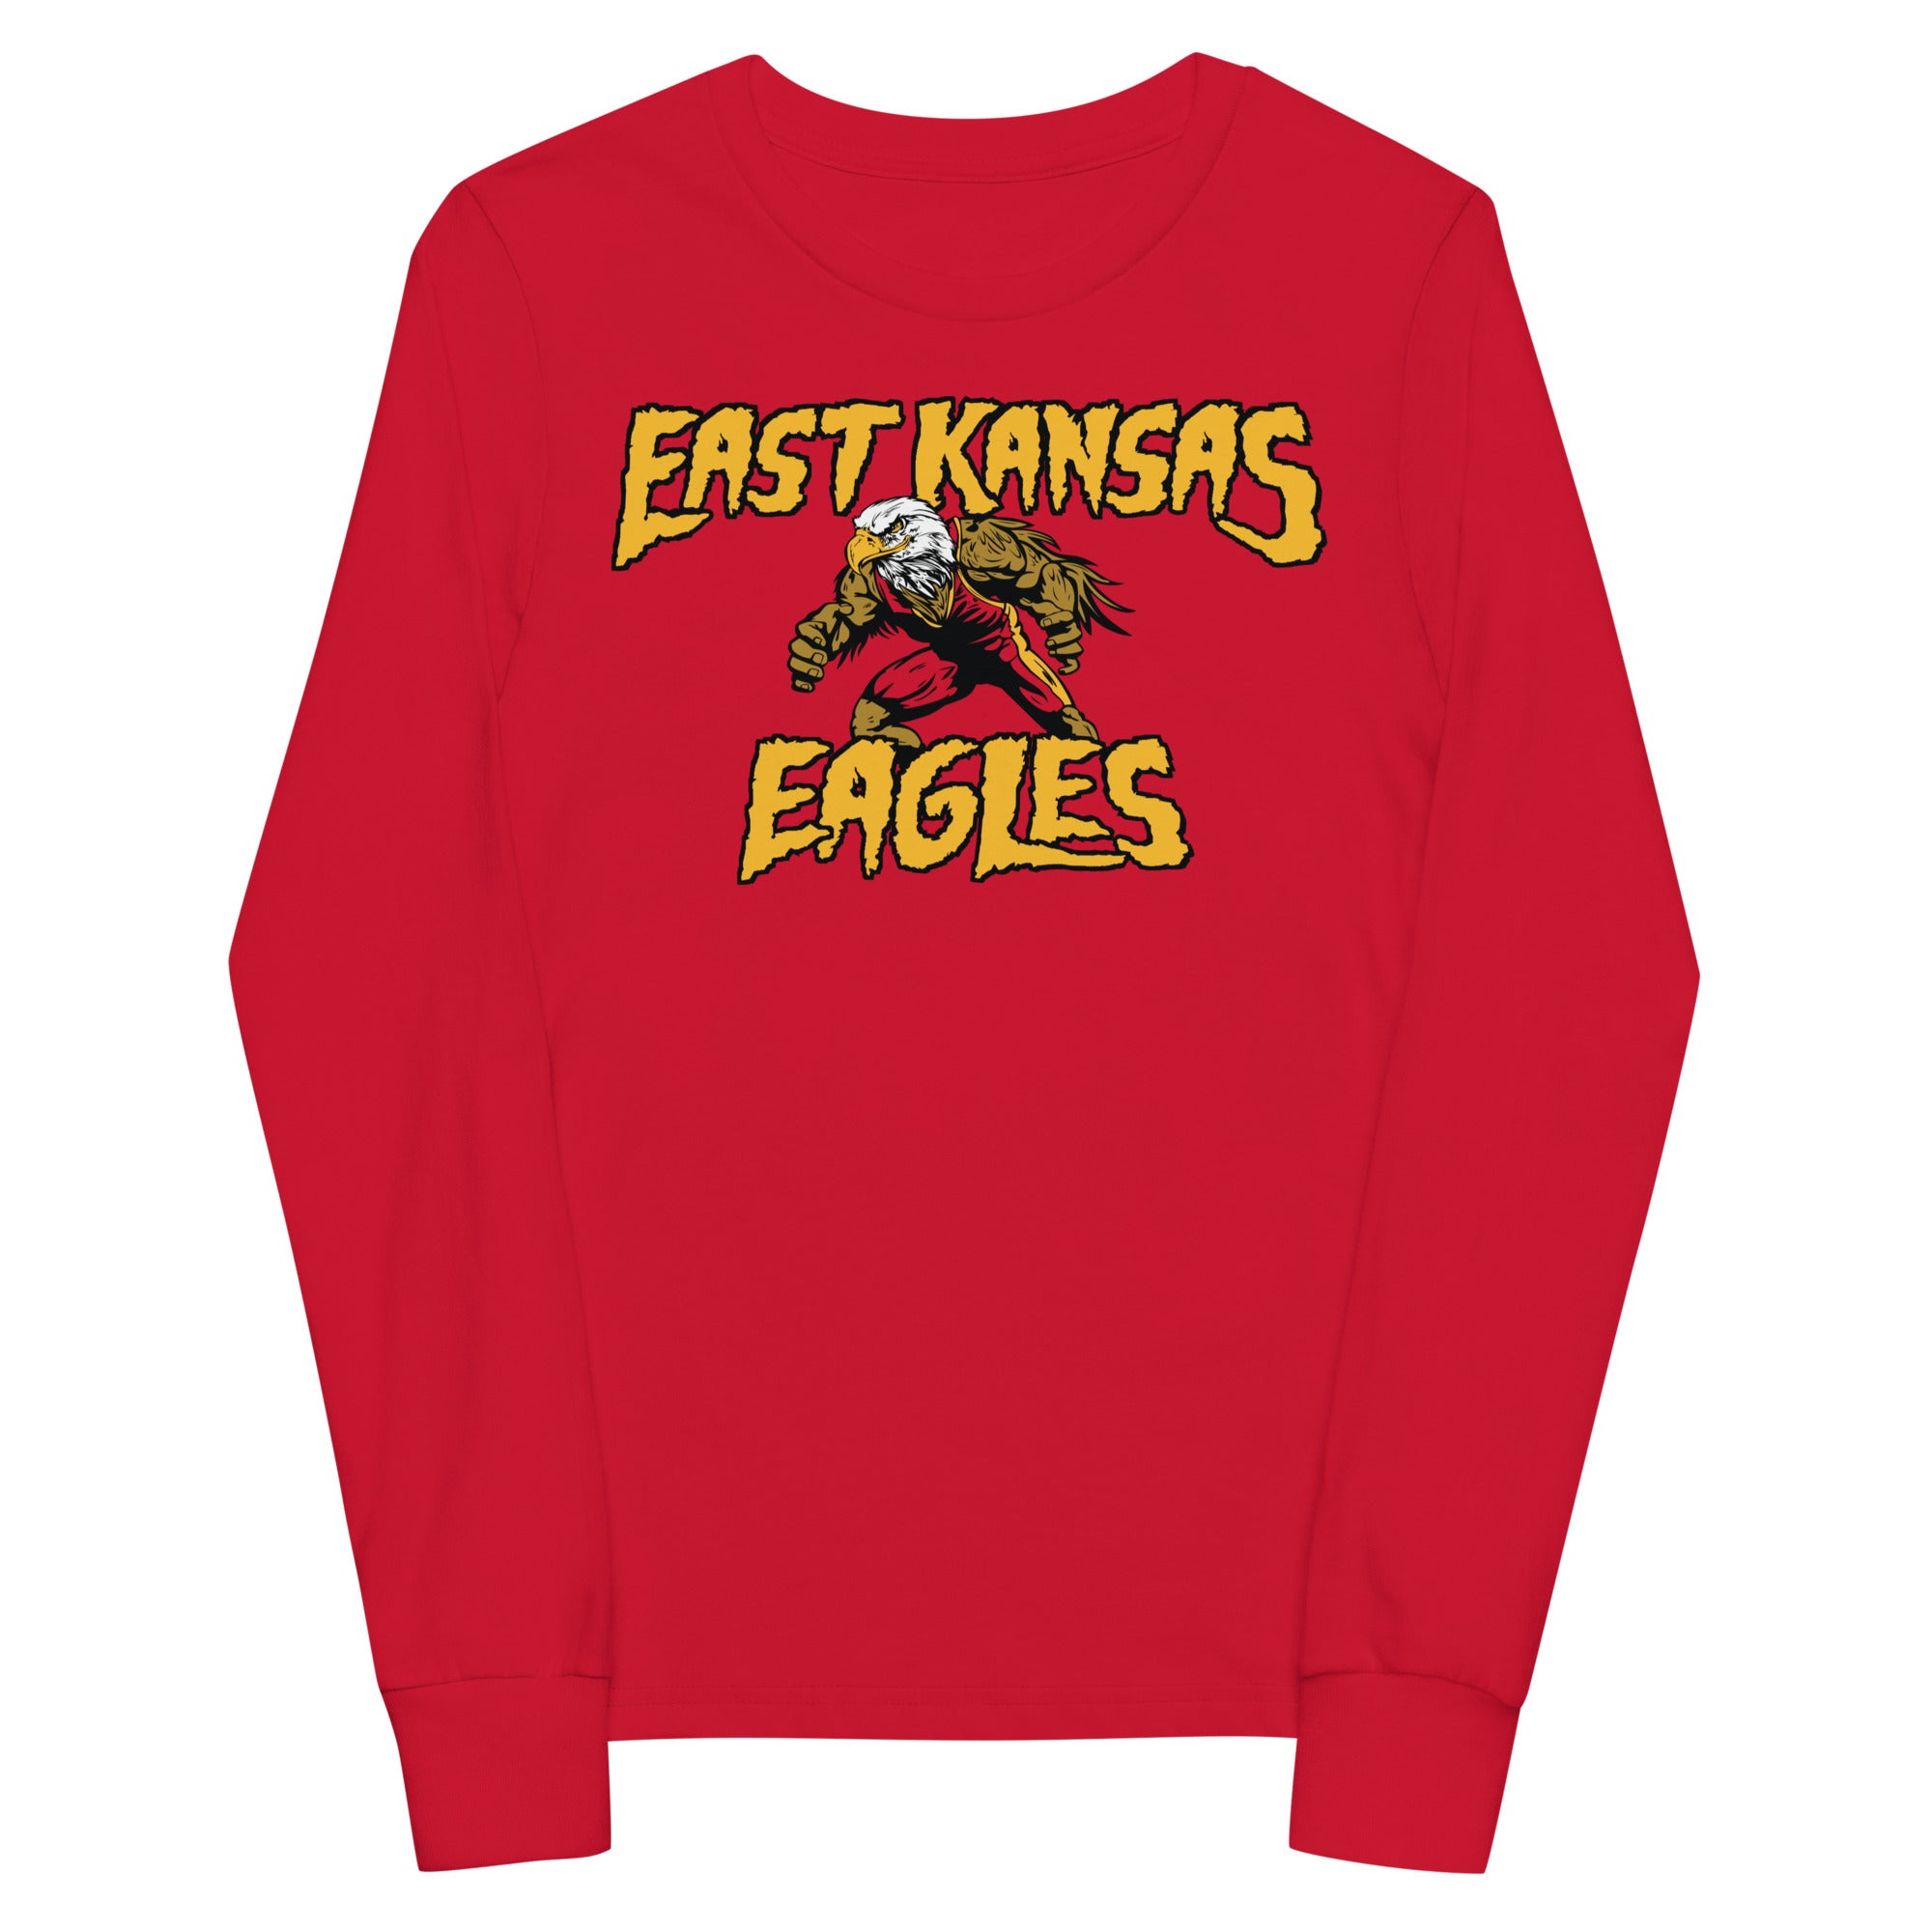 East Kansas Eagles Youth long sleeve tee